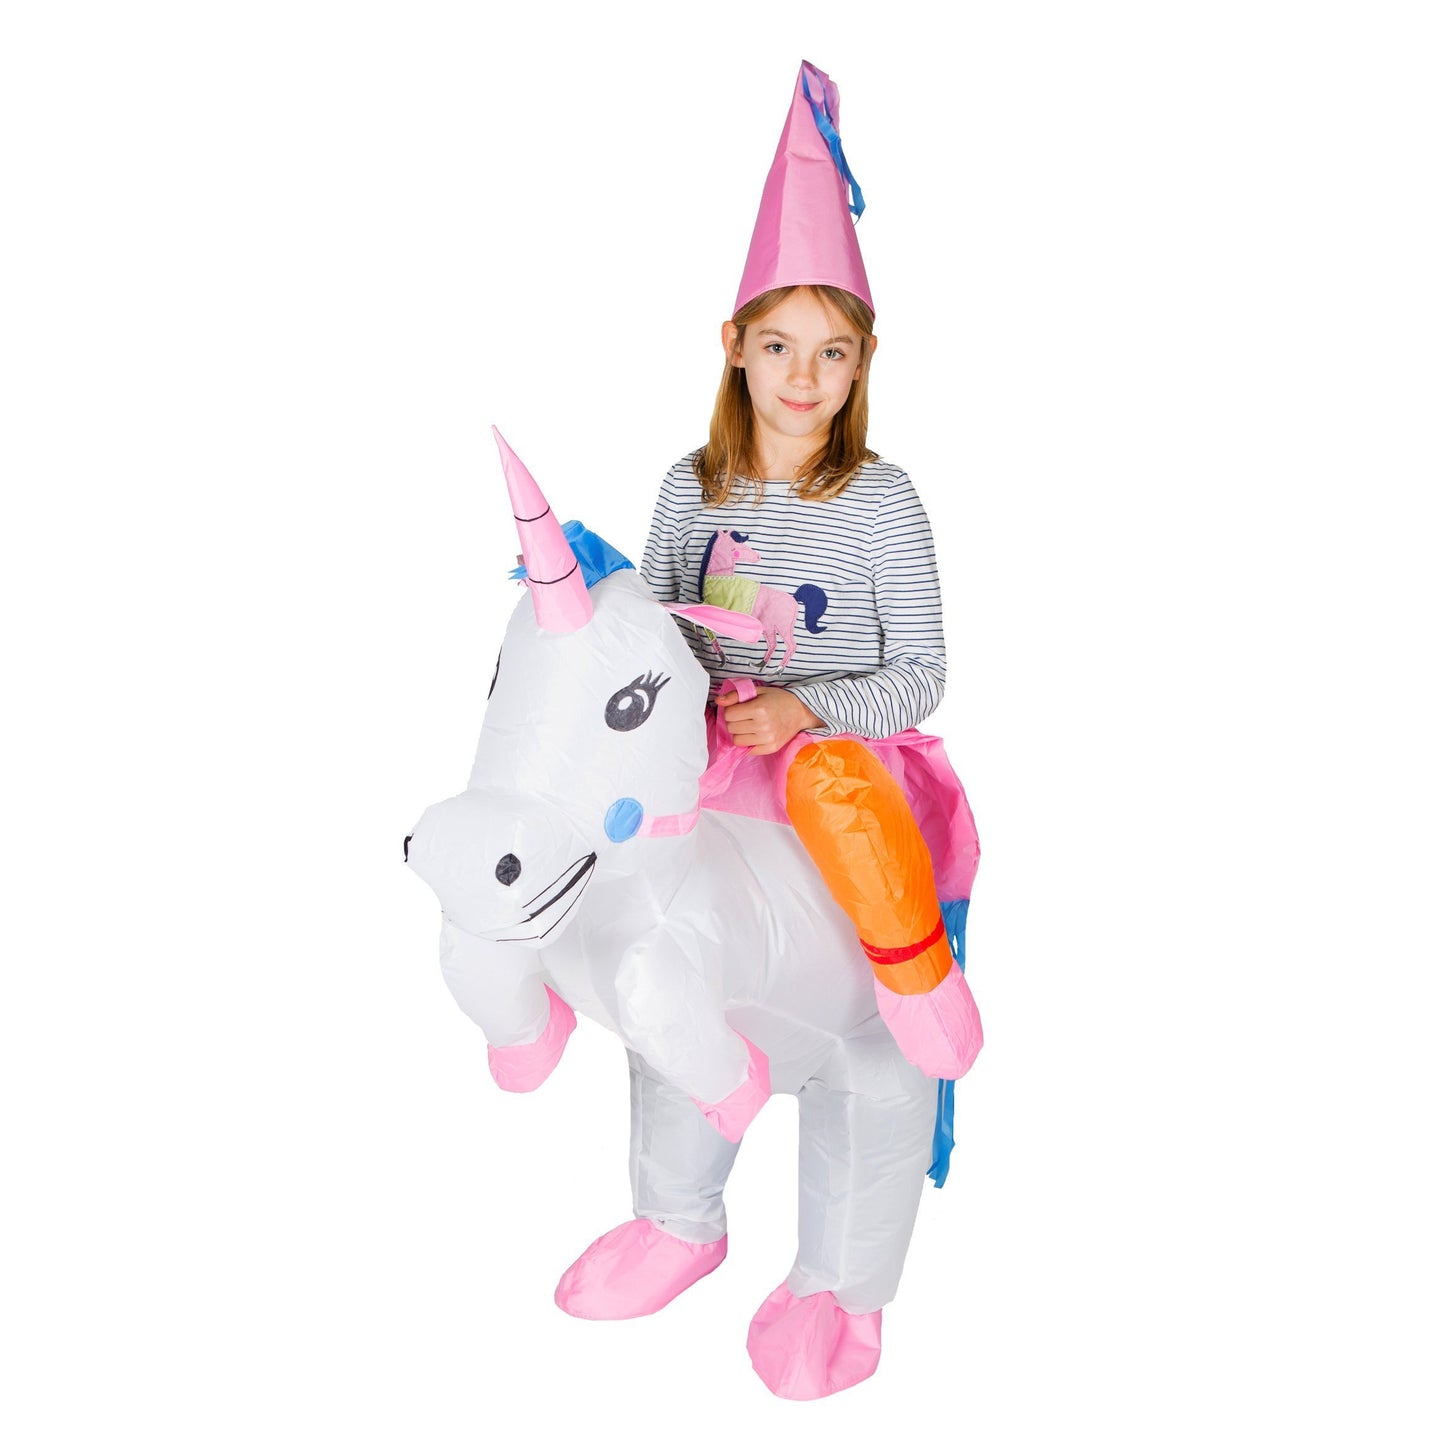 Kids Inflatable Costume - Unicorn